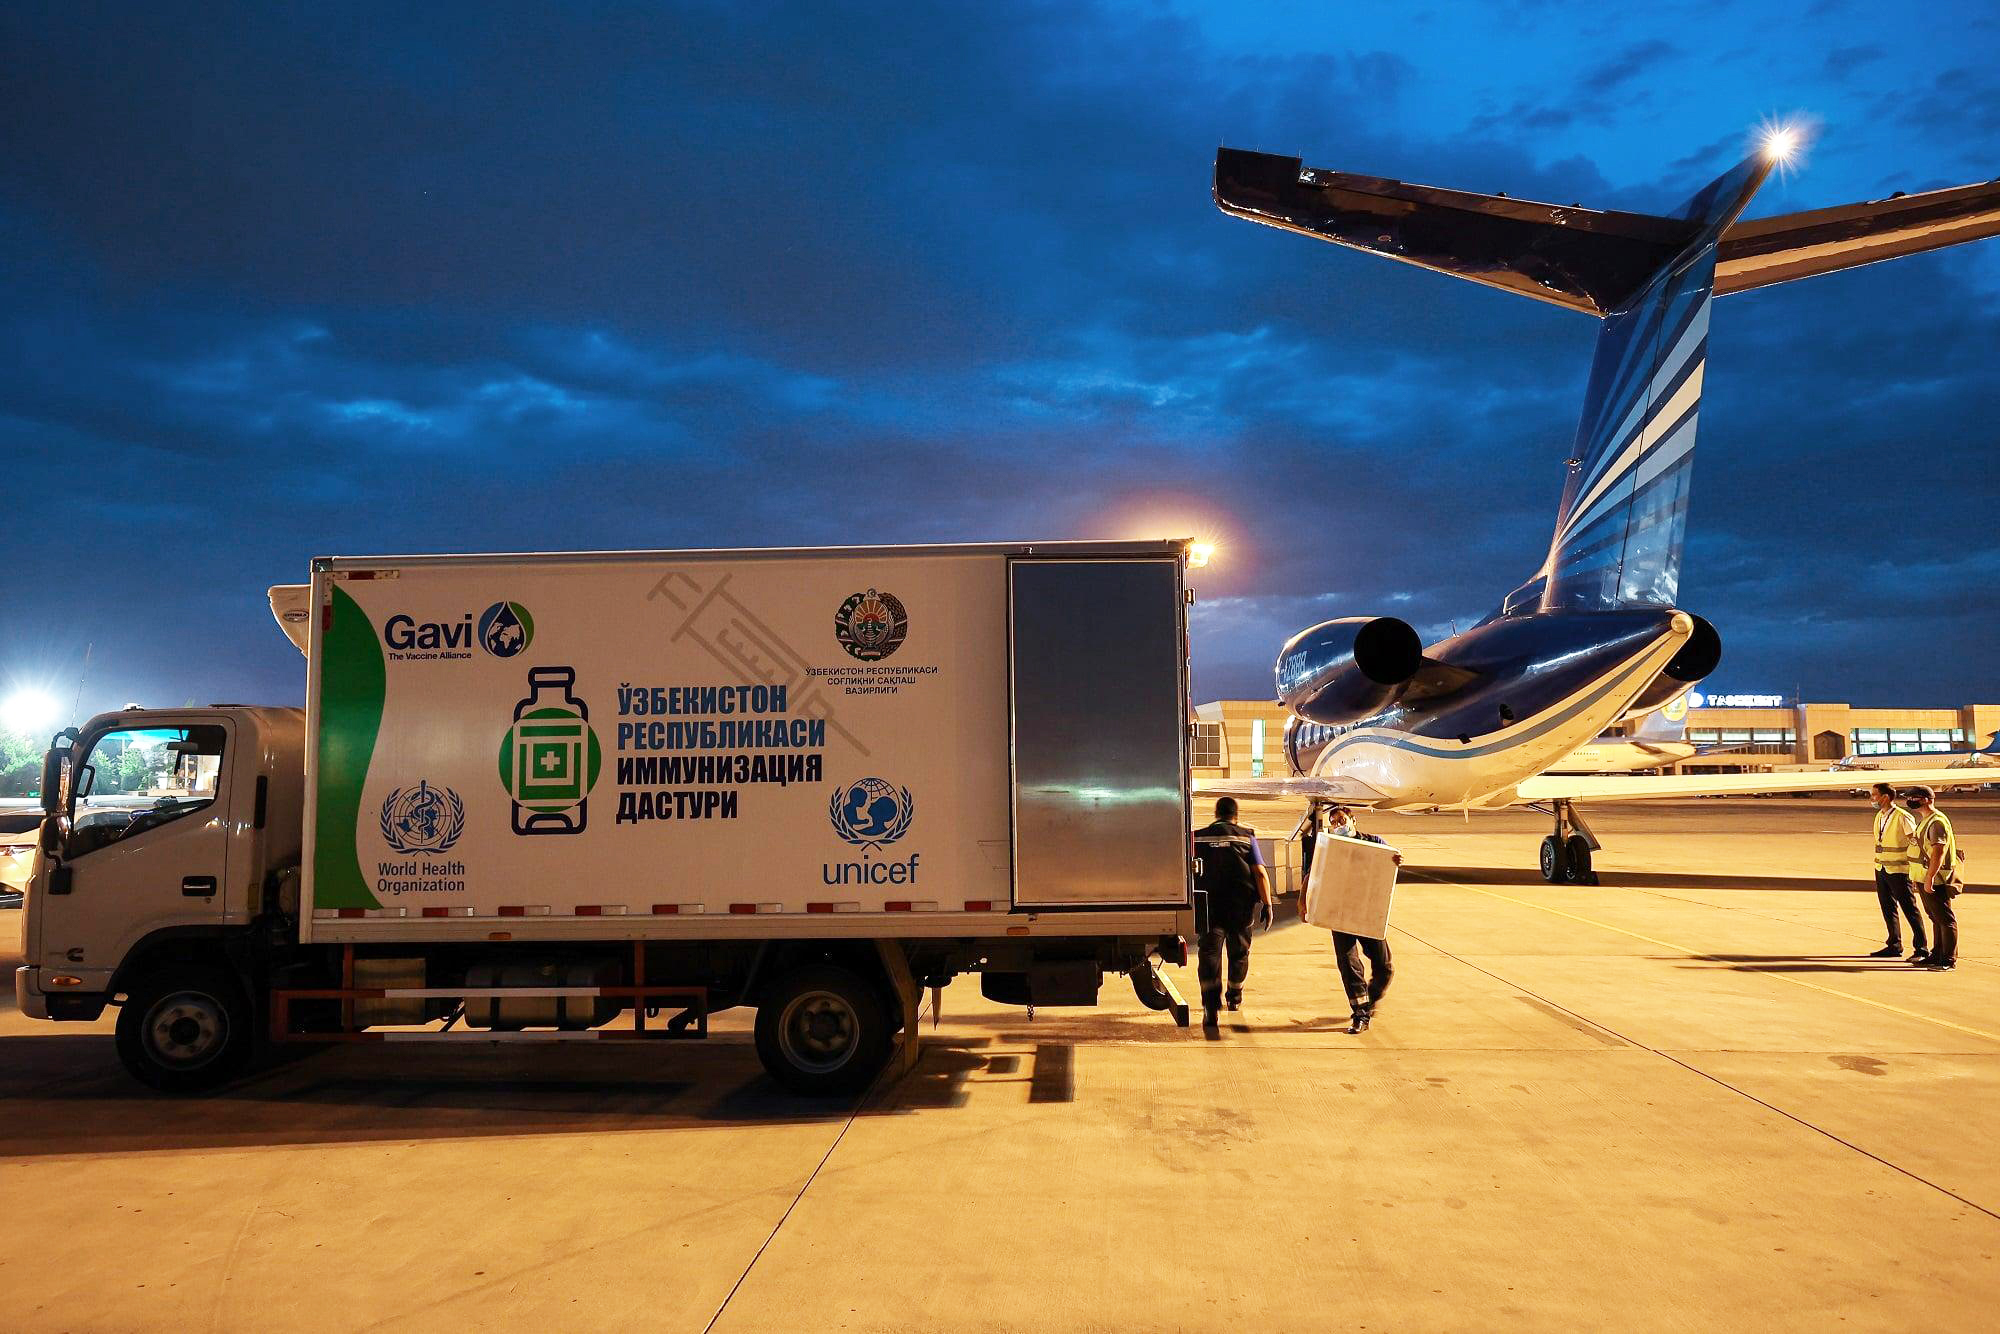 ASG Business Aviation aircraft delivered Vaxzevria (AstraZeneca) vaccine to Uzbekistan